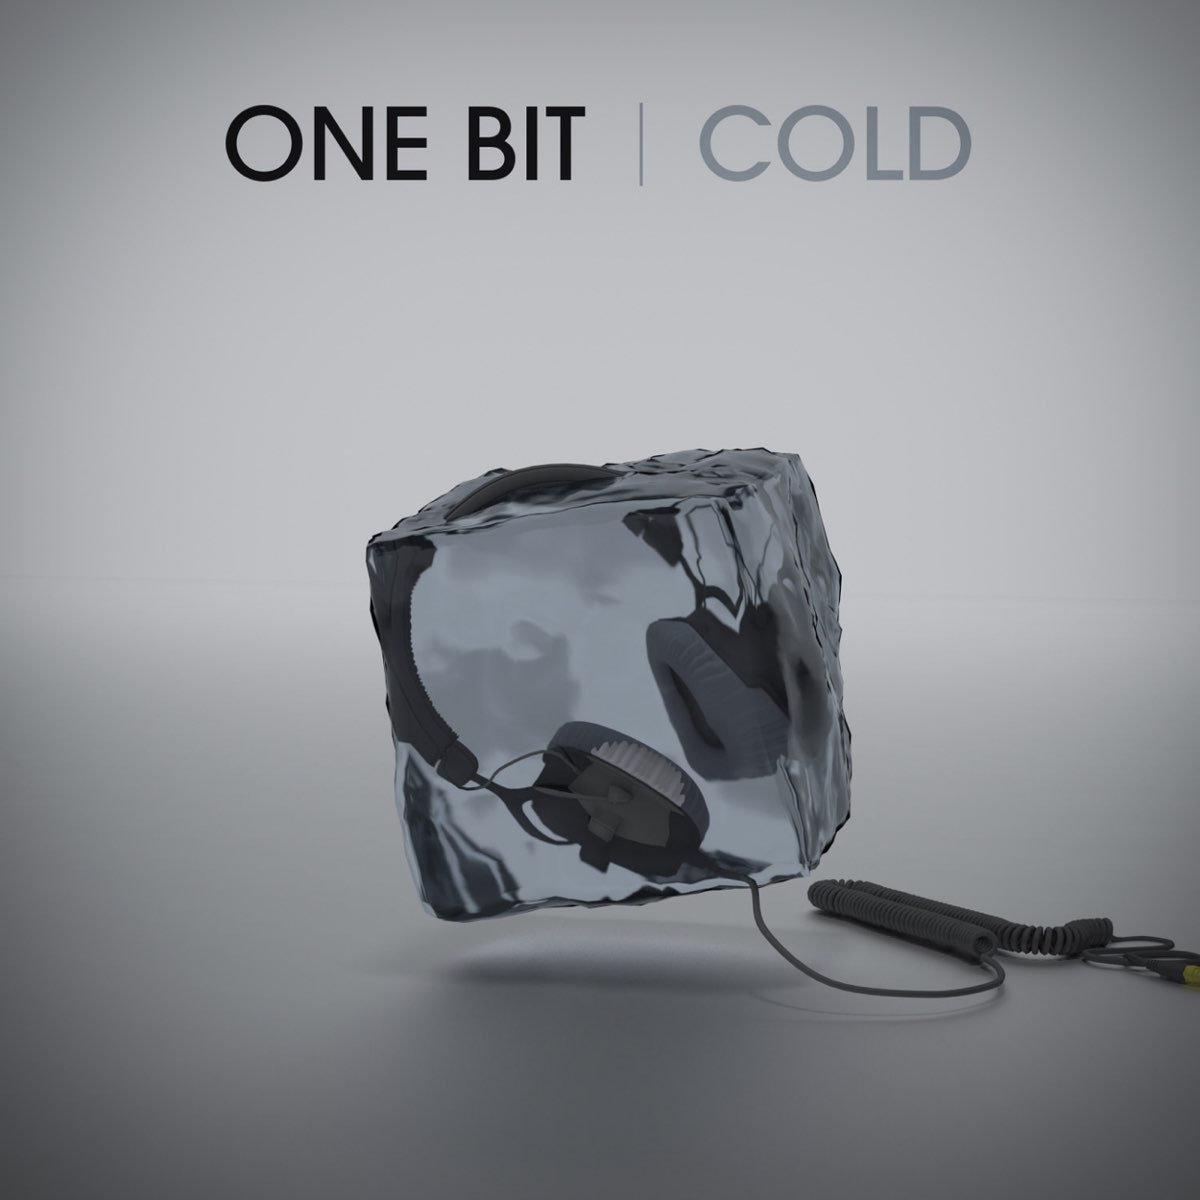 One bit. Cold Loner Tape. Cold Culture - Cold (Single). Картинка холод 1bit.